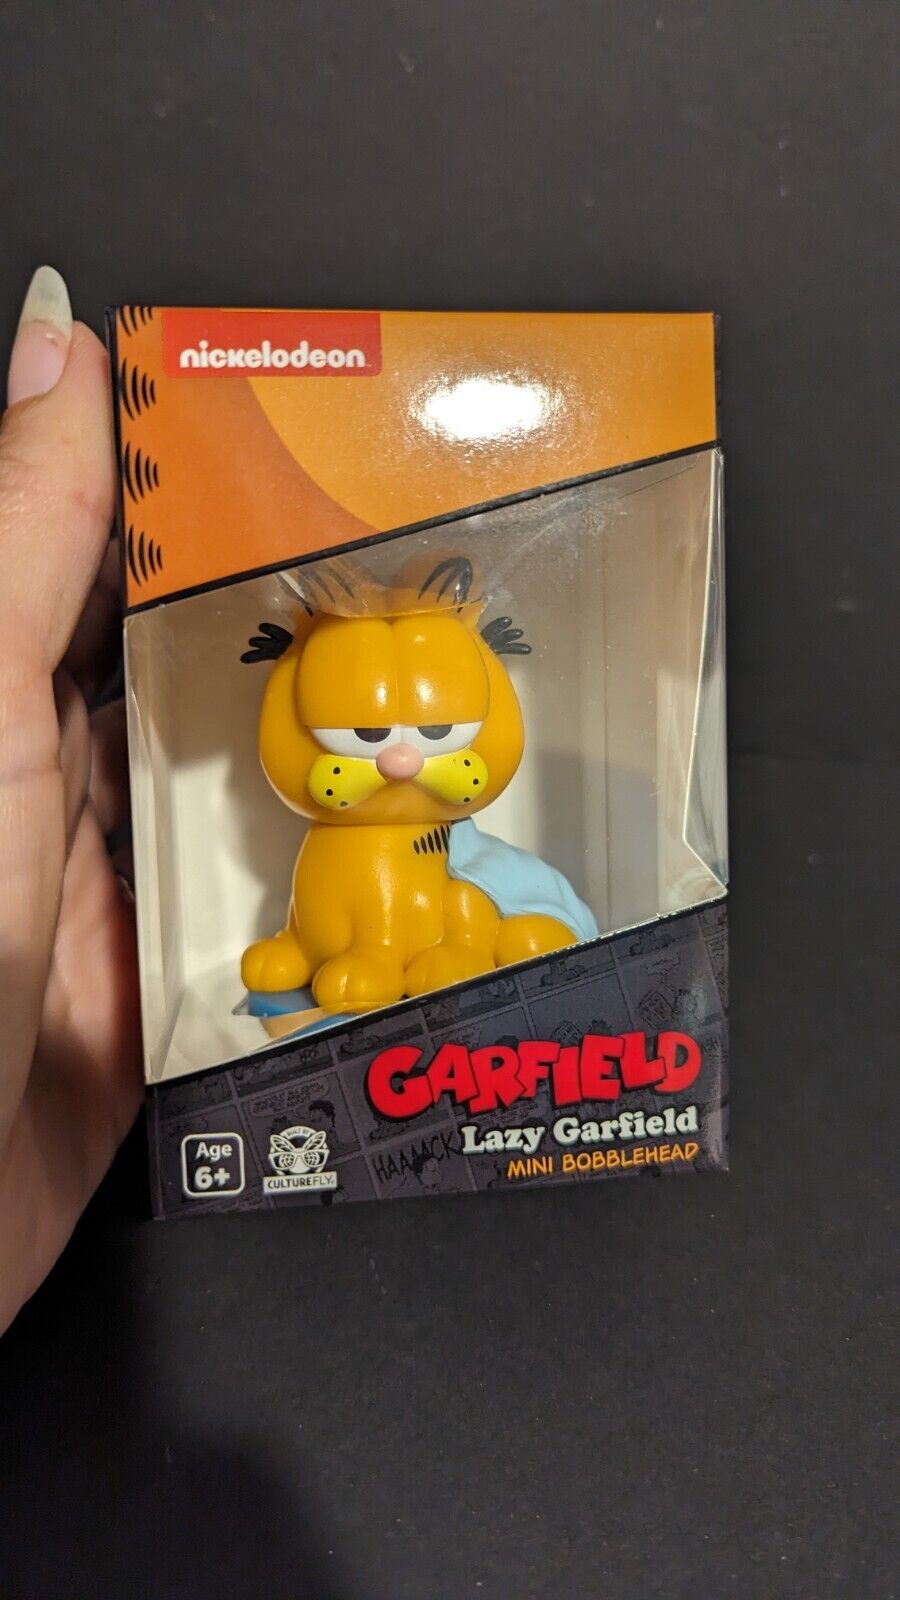 Nickelodeon - Lazy Garfield - Mini Bobblehead by Culturefly